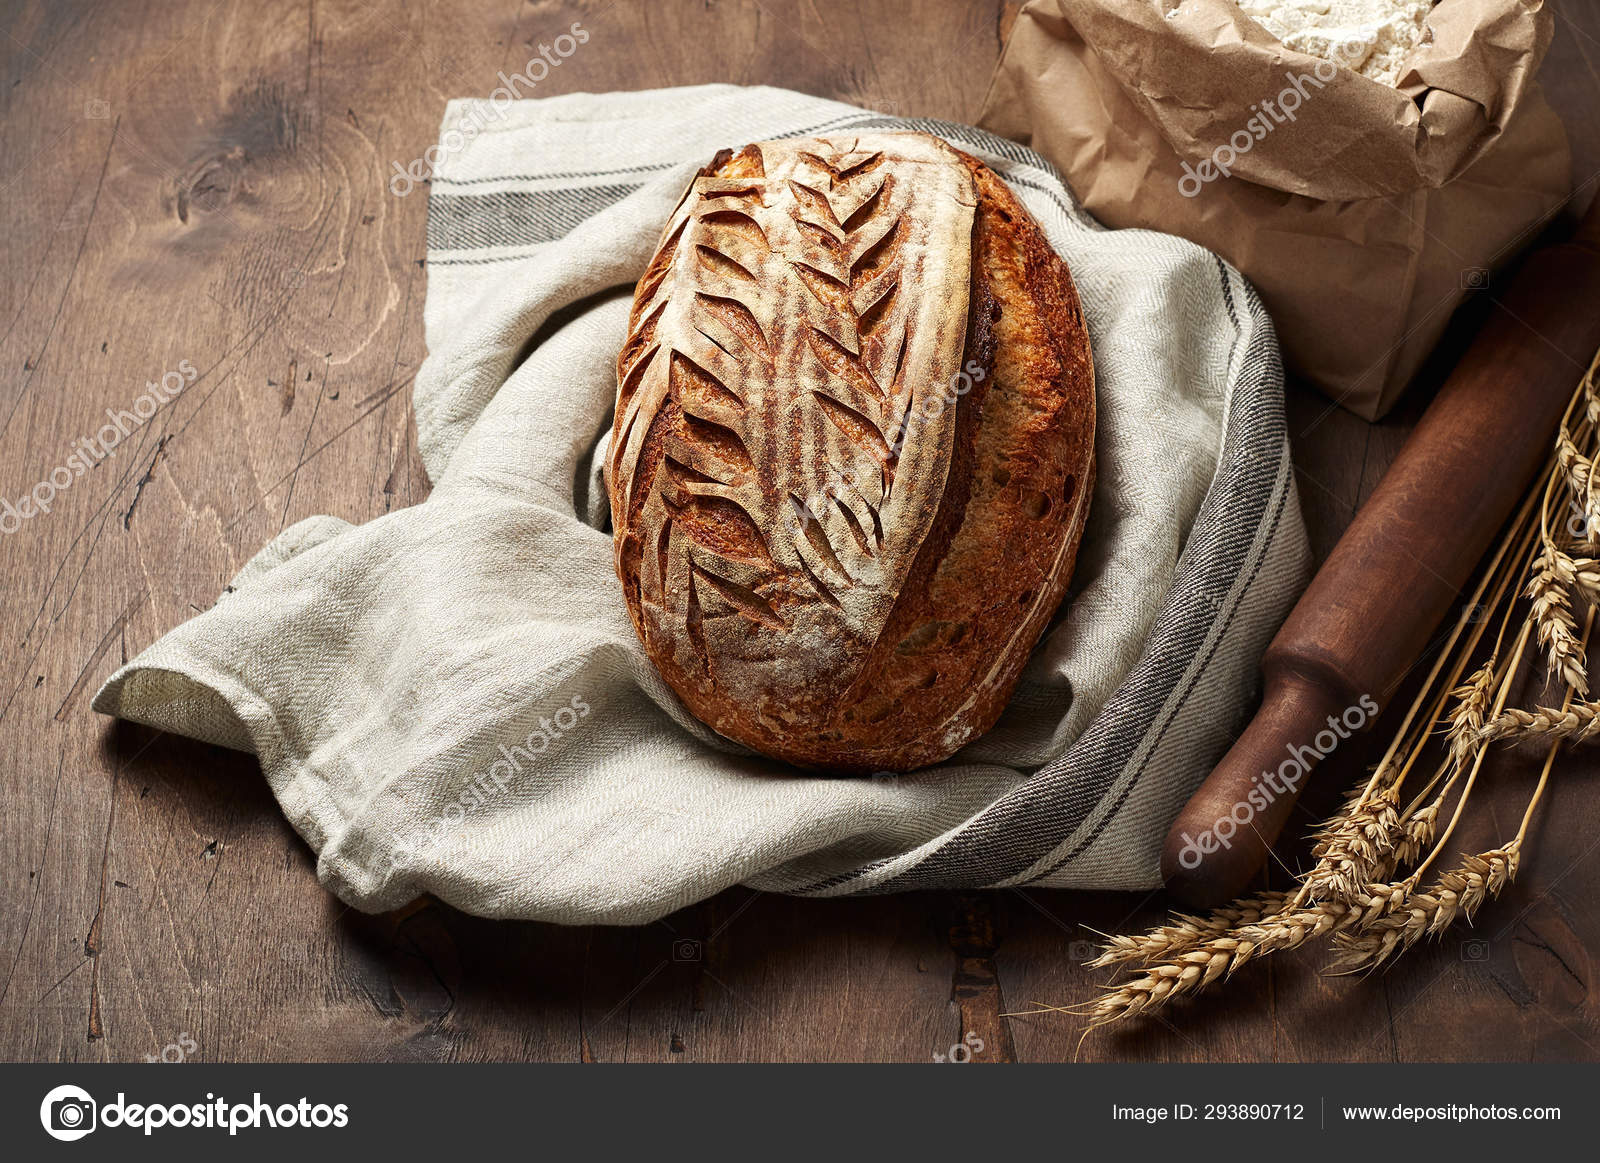 https://st4.depositphotos.com/3581801/29389/i/1600/depositphotos_293890712-stock-photo-freshly-baked-artisan-sourdough-bread.jpg